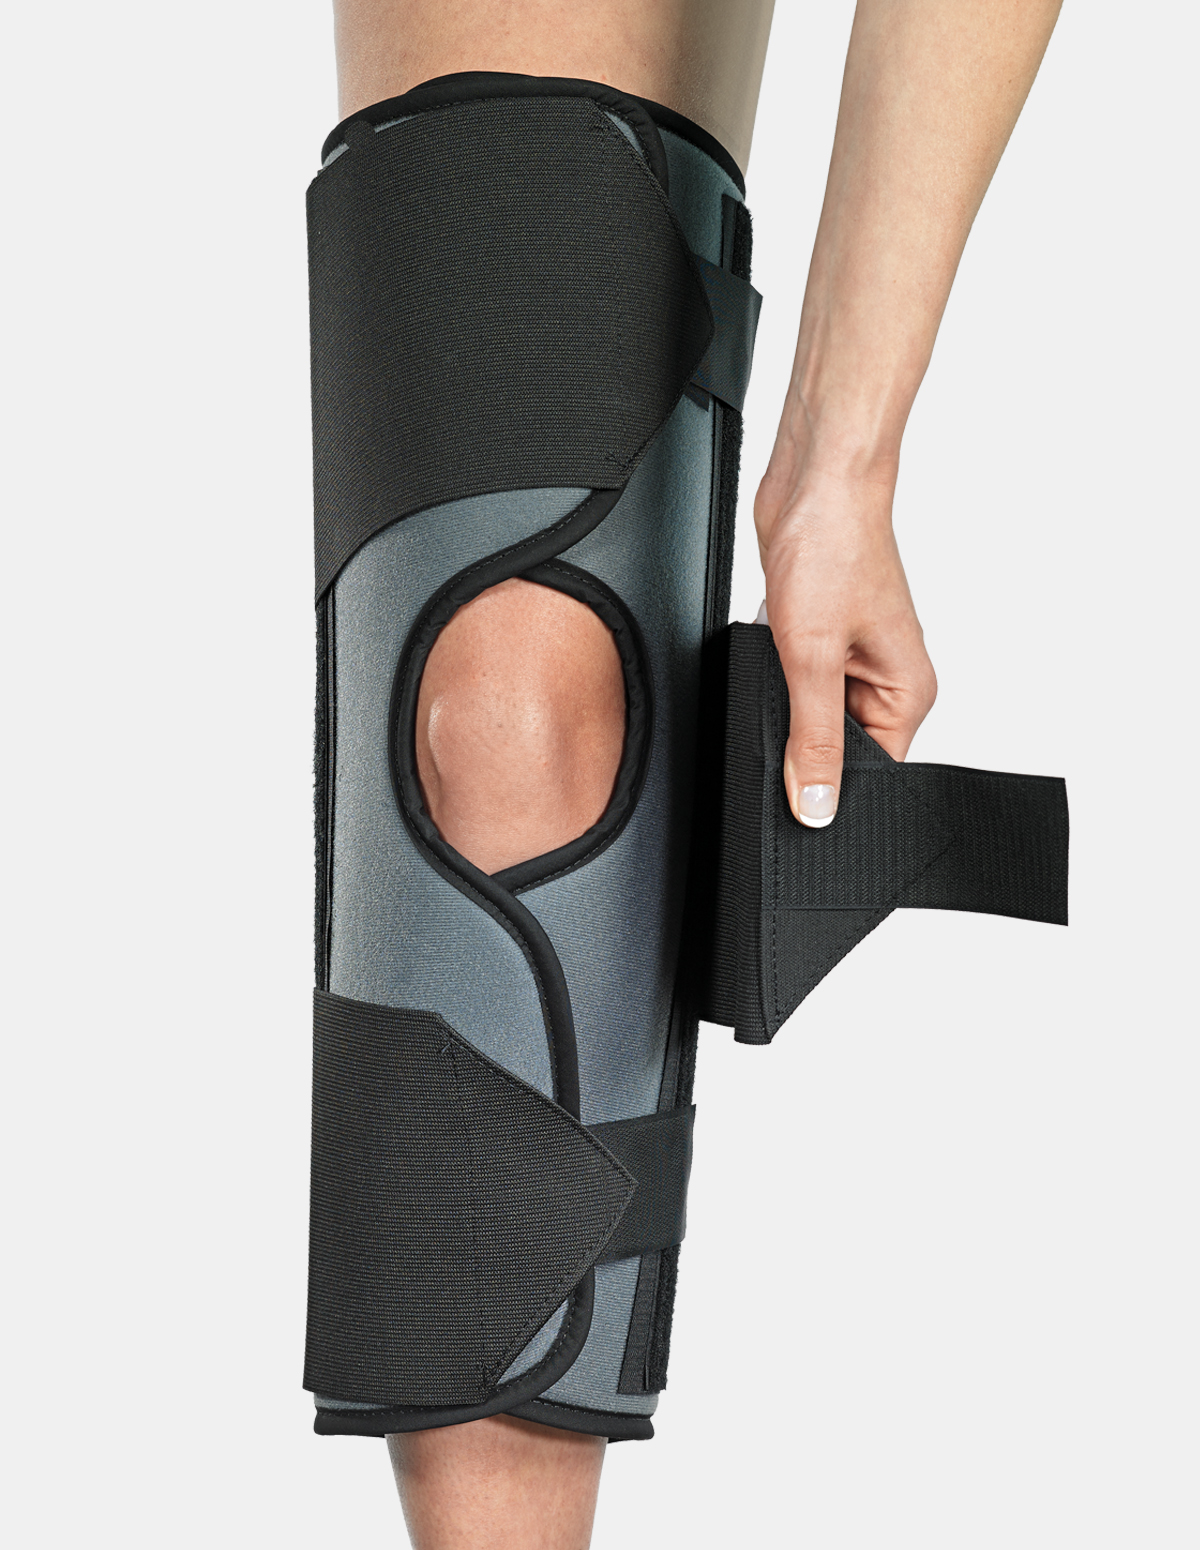 Formedica™ Leg and Knee Immobilizer - Regular model